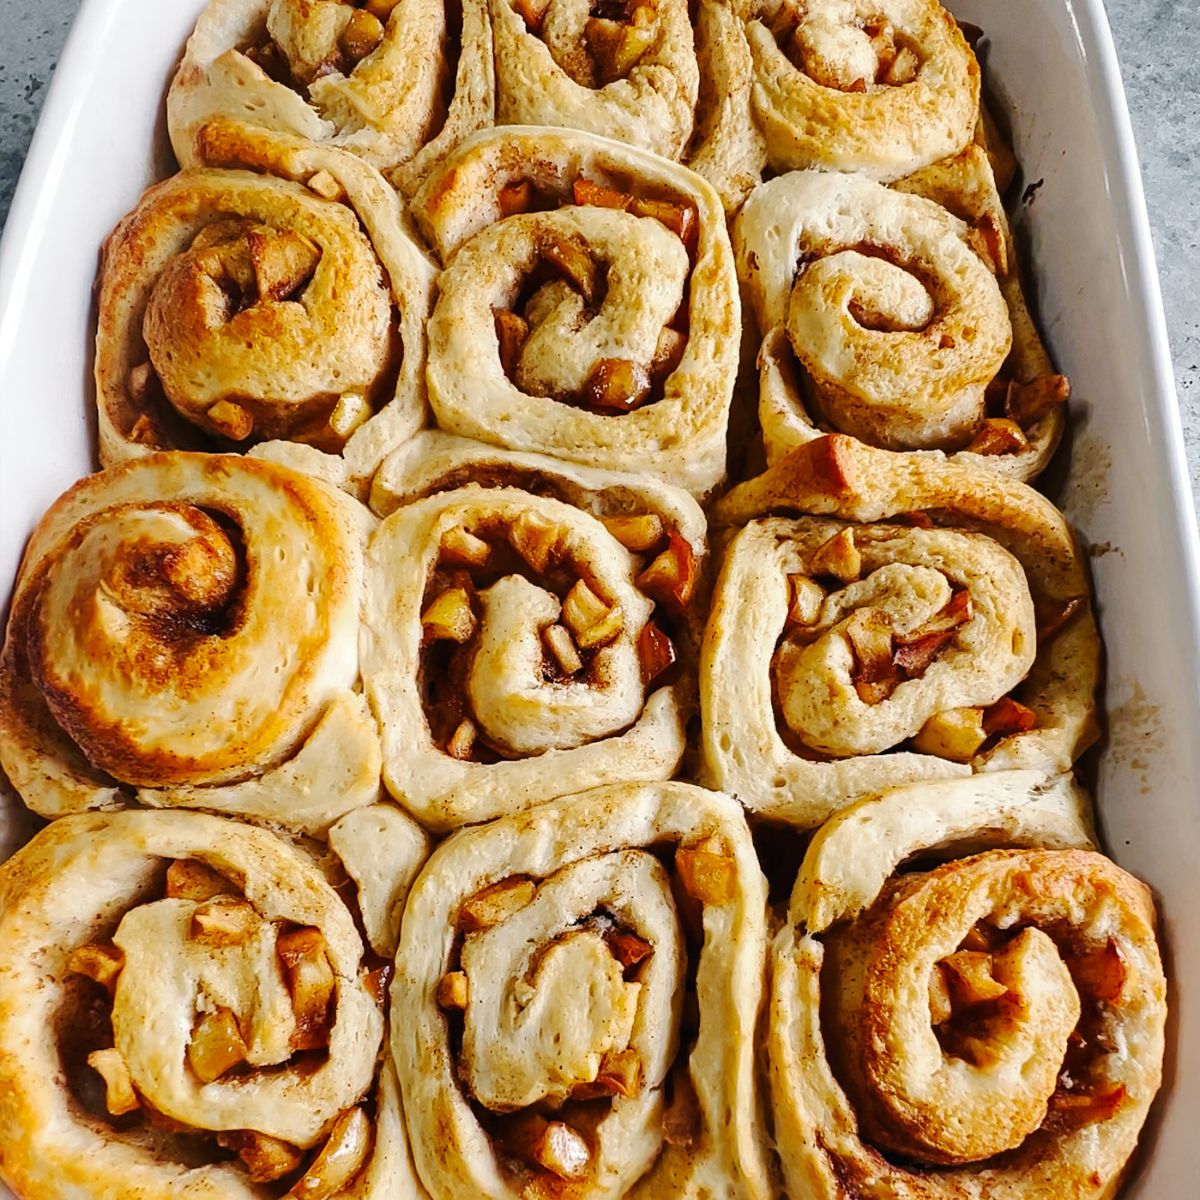 Twelve baked cinnamon rolls in a baking dish.